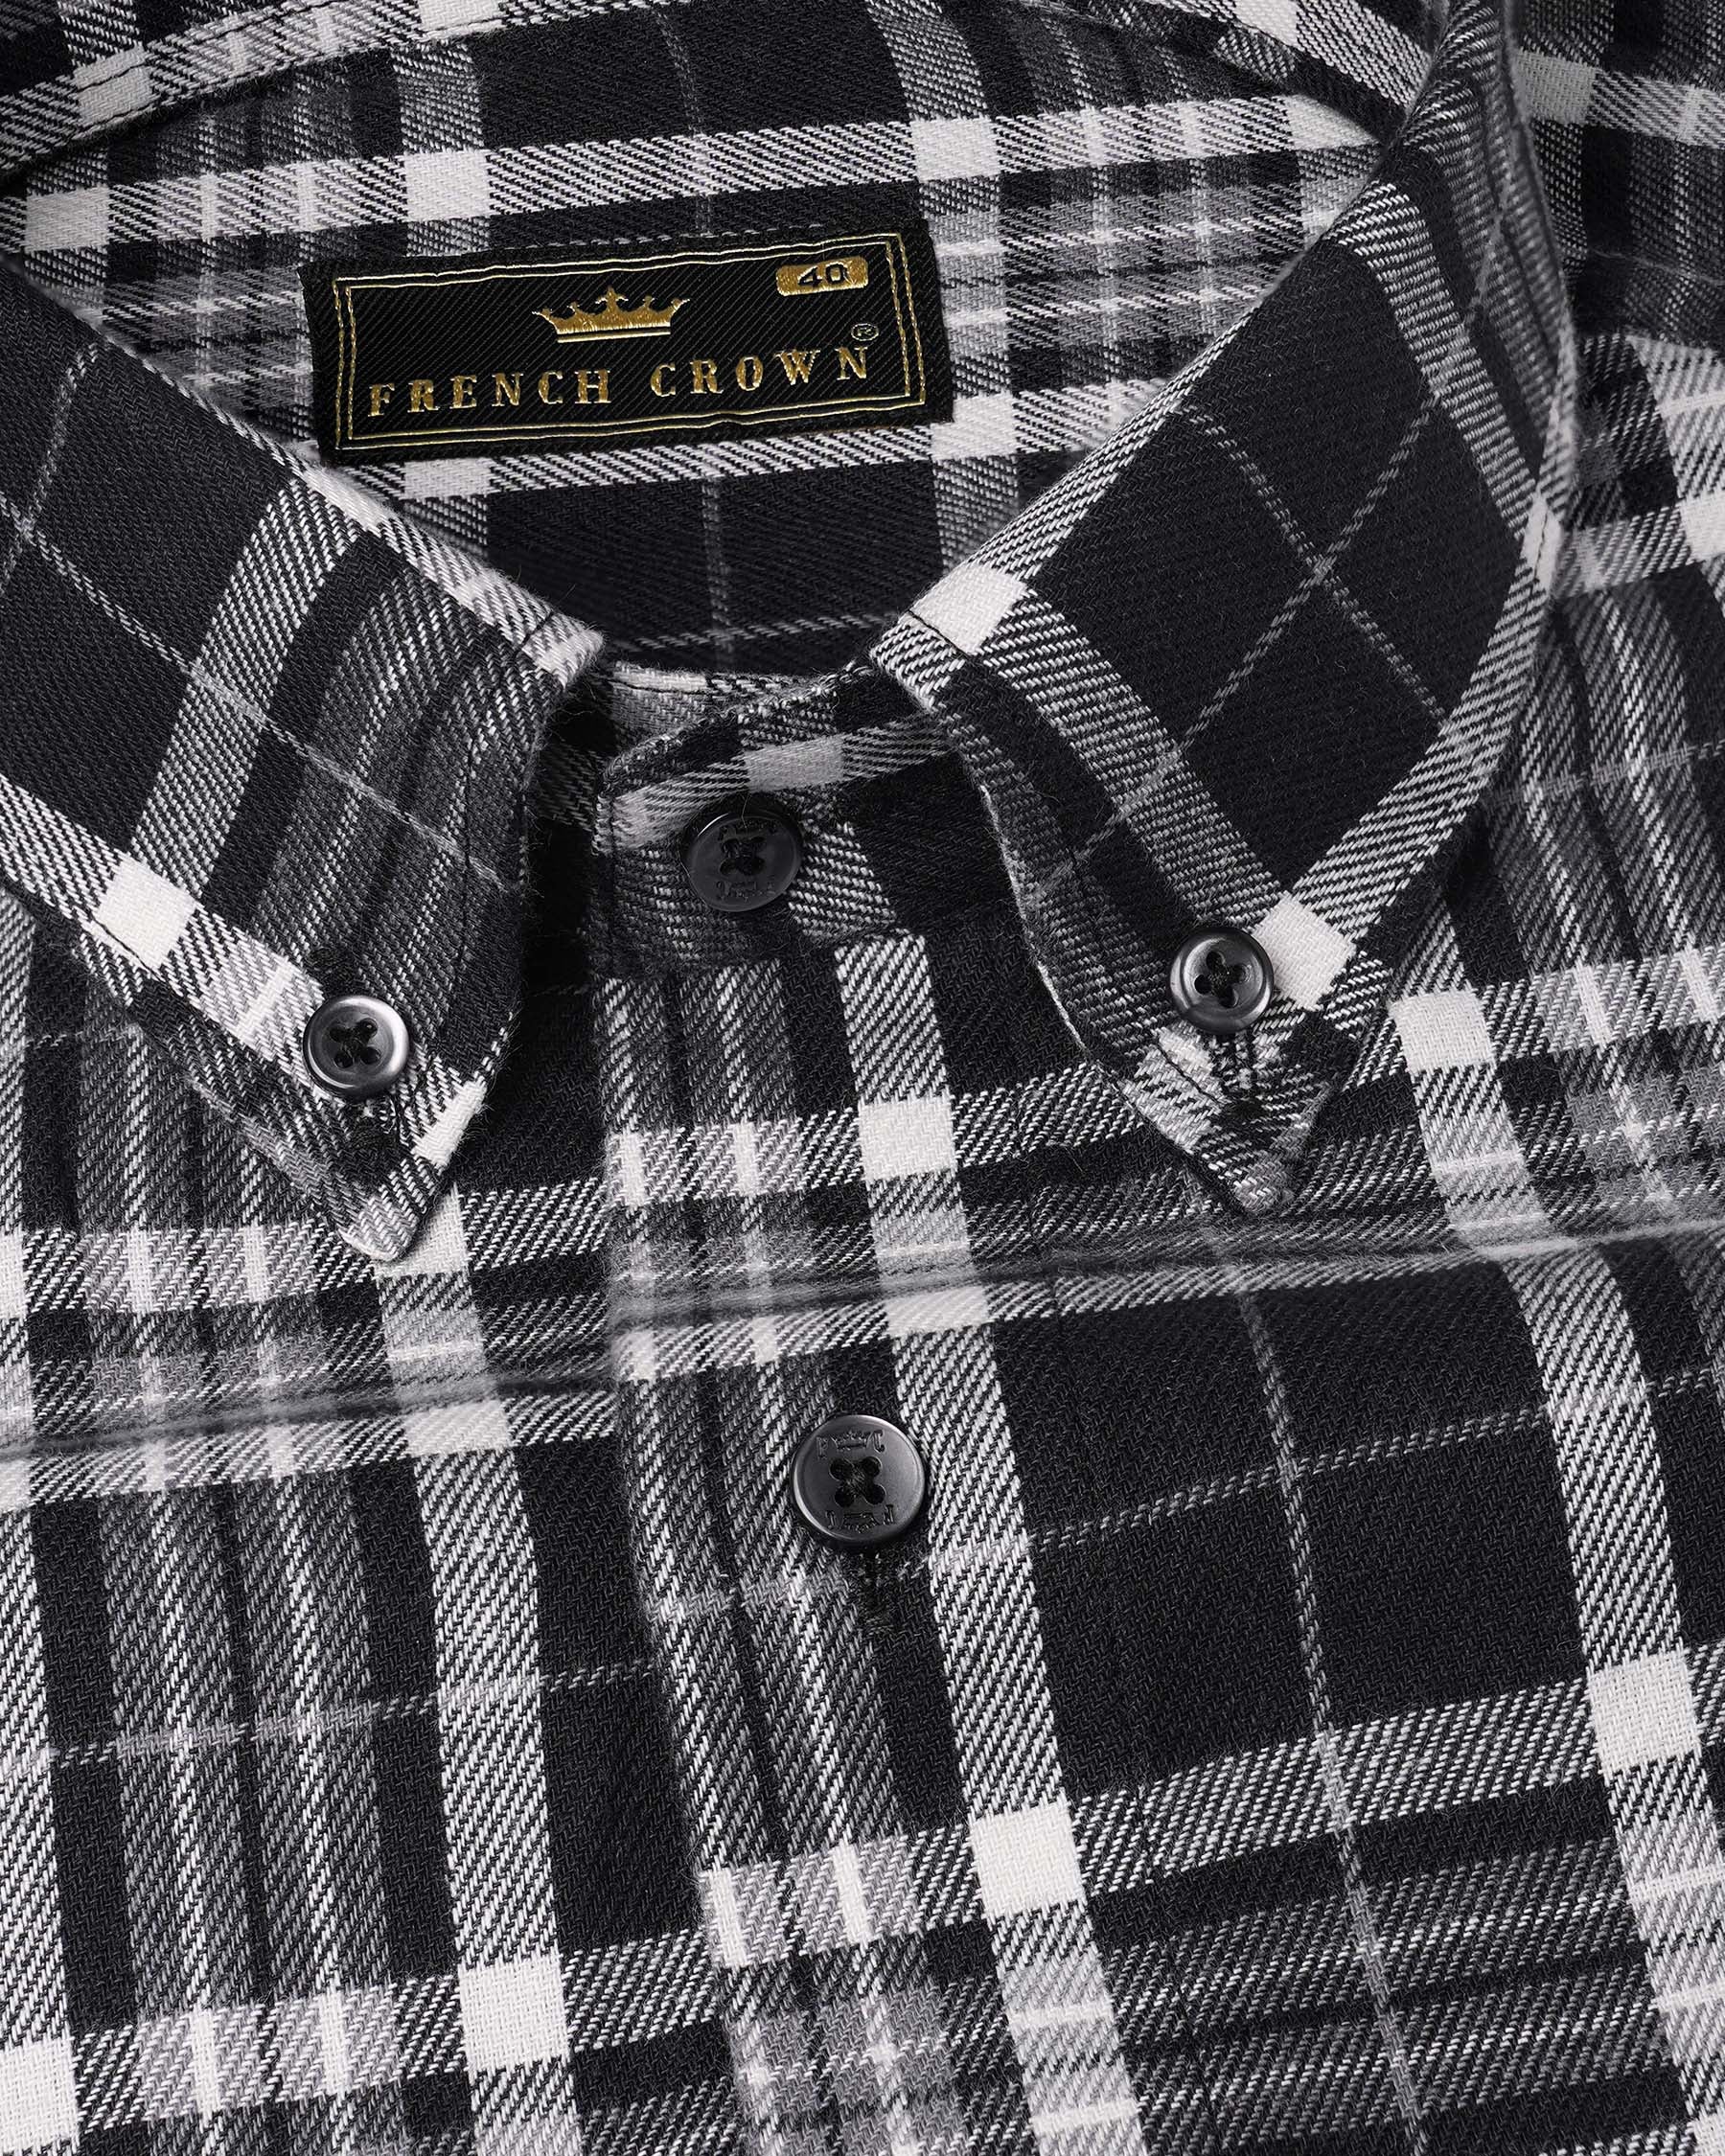 Jade Black and Quartz Gray Plaid Flannel Shirt